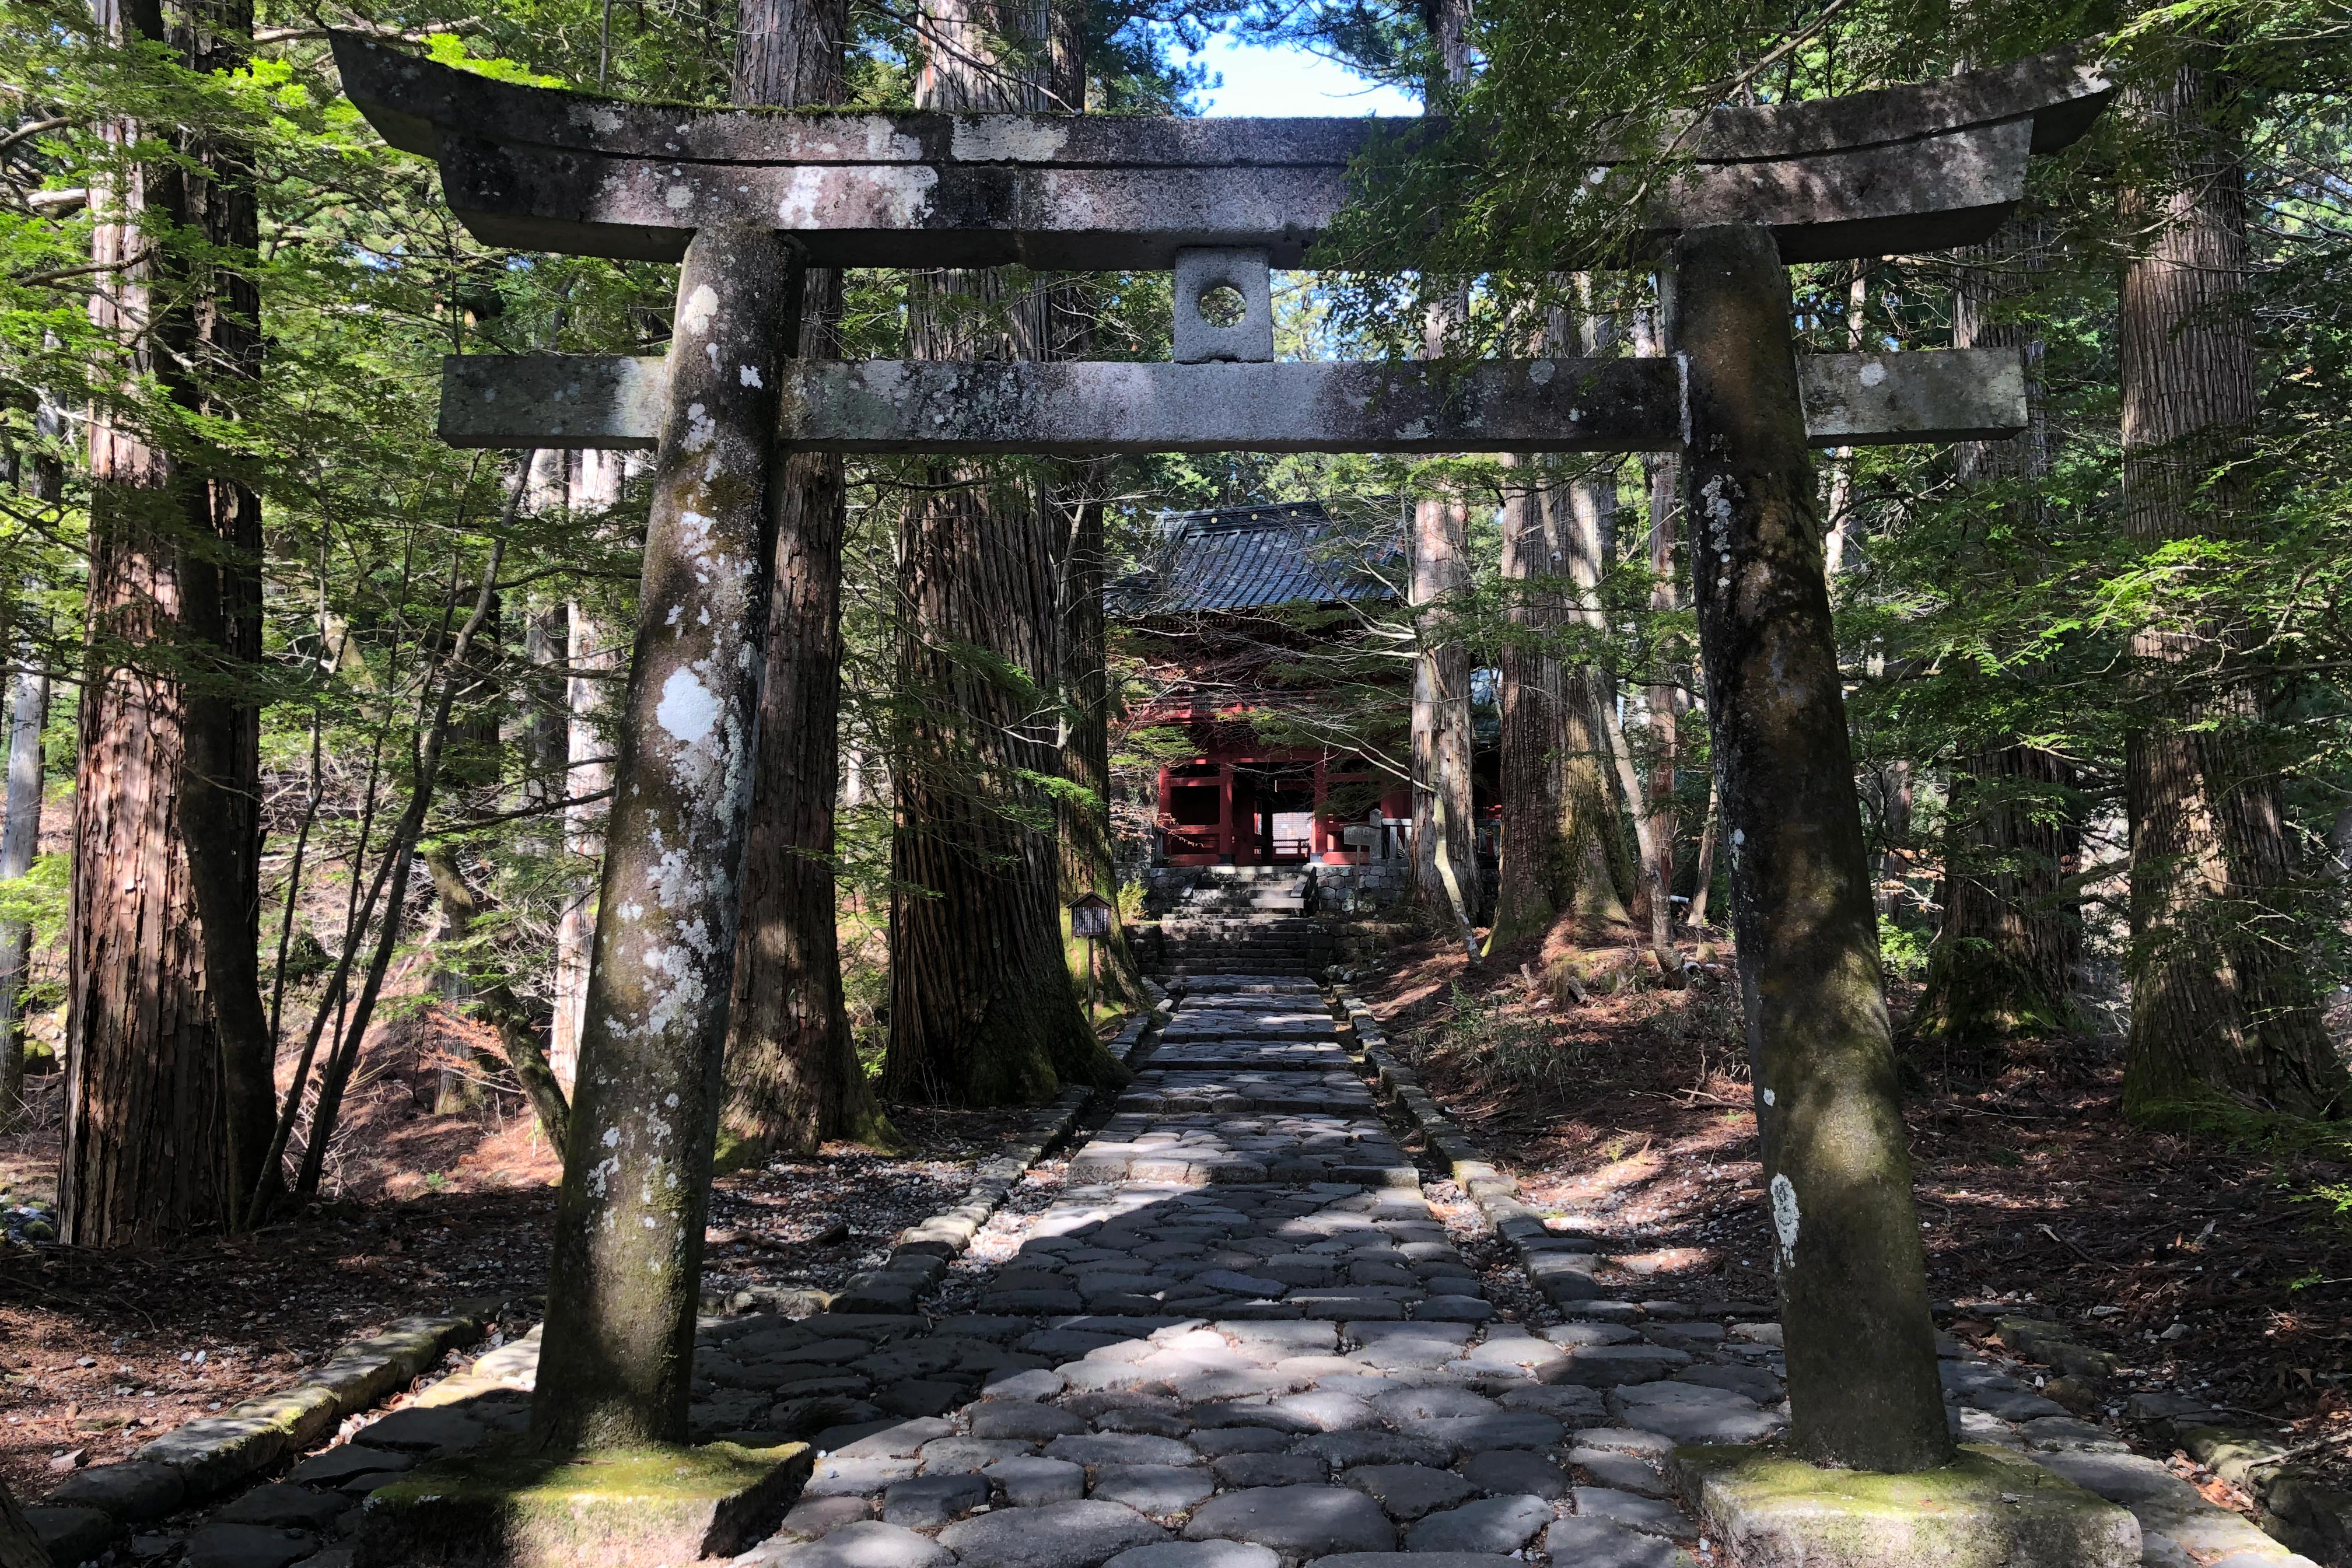 Undameshi no Torii, Luck-Testing Gate